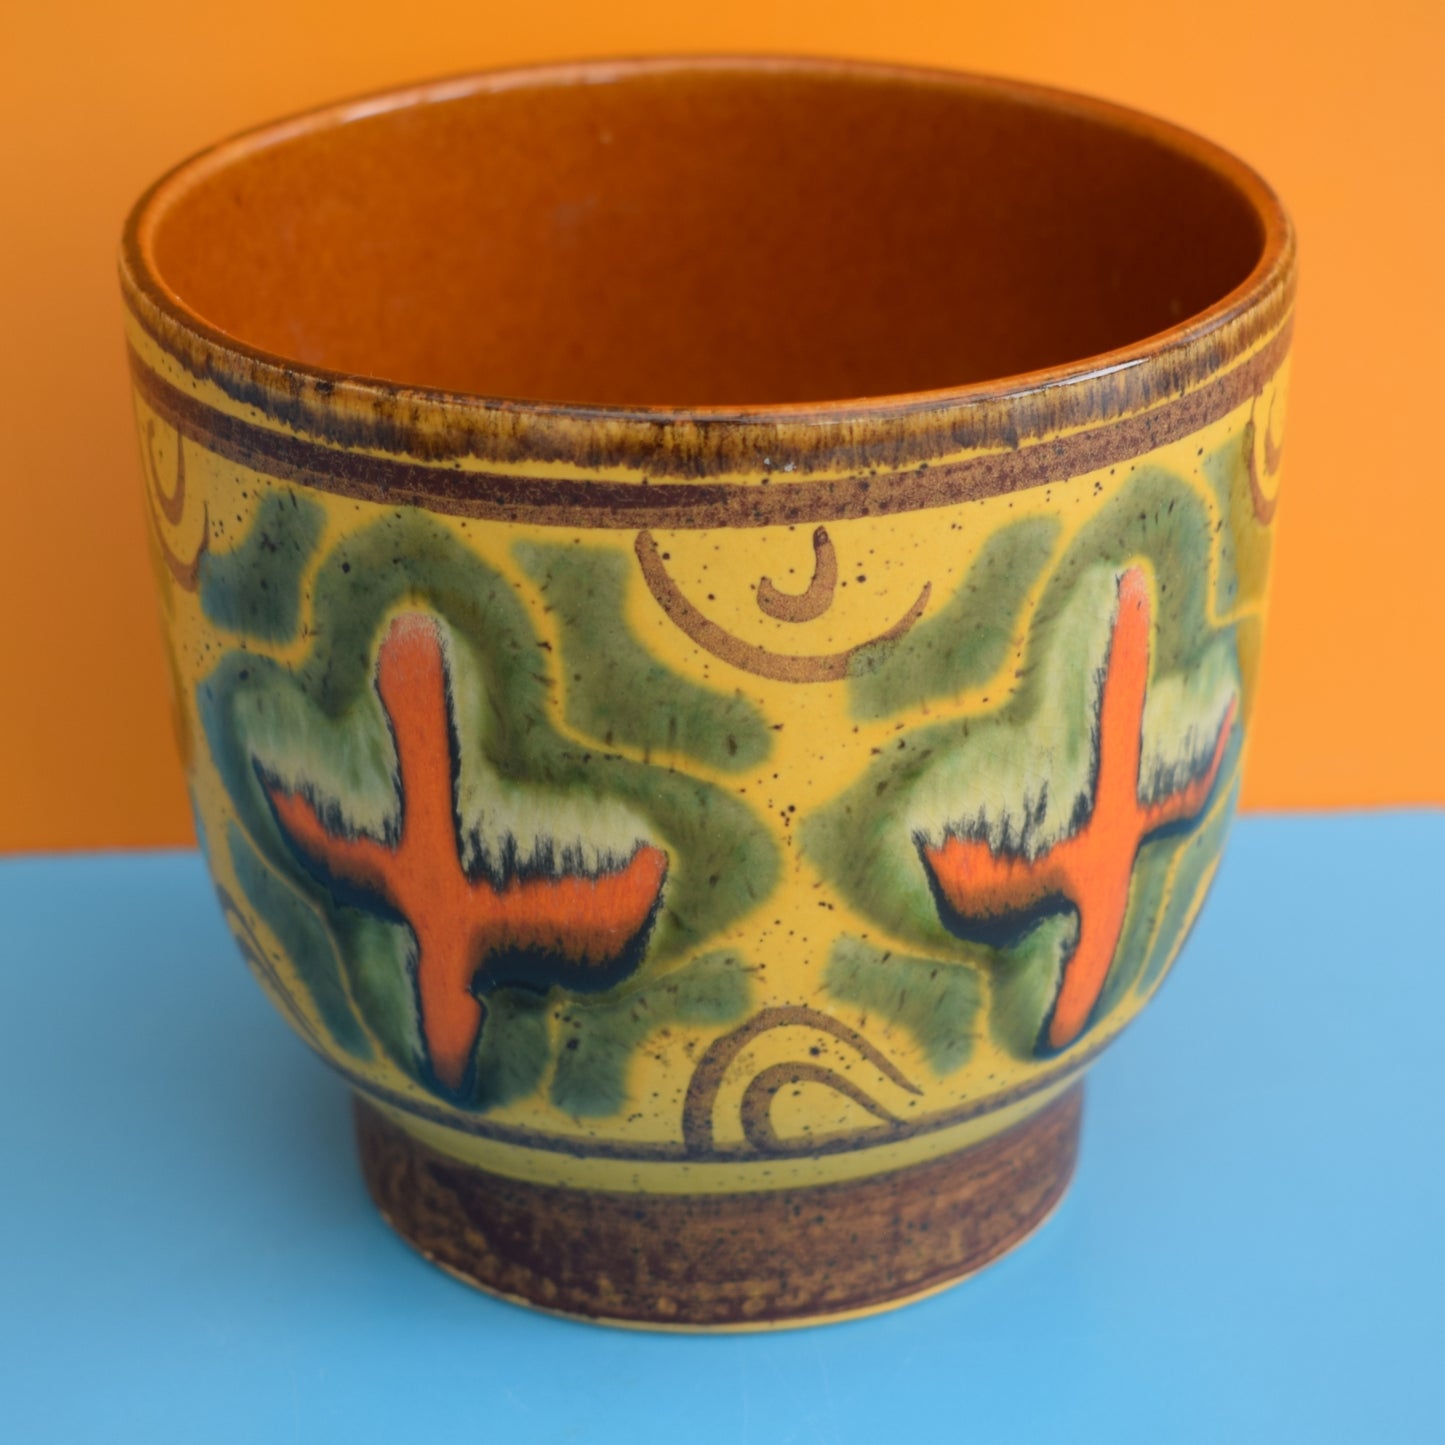 Vintage 1970s Ceramic Planter - Orange/ Yellow